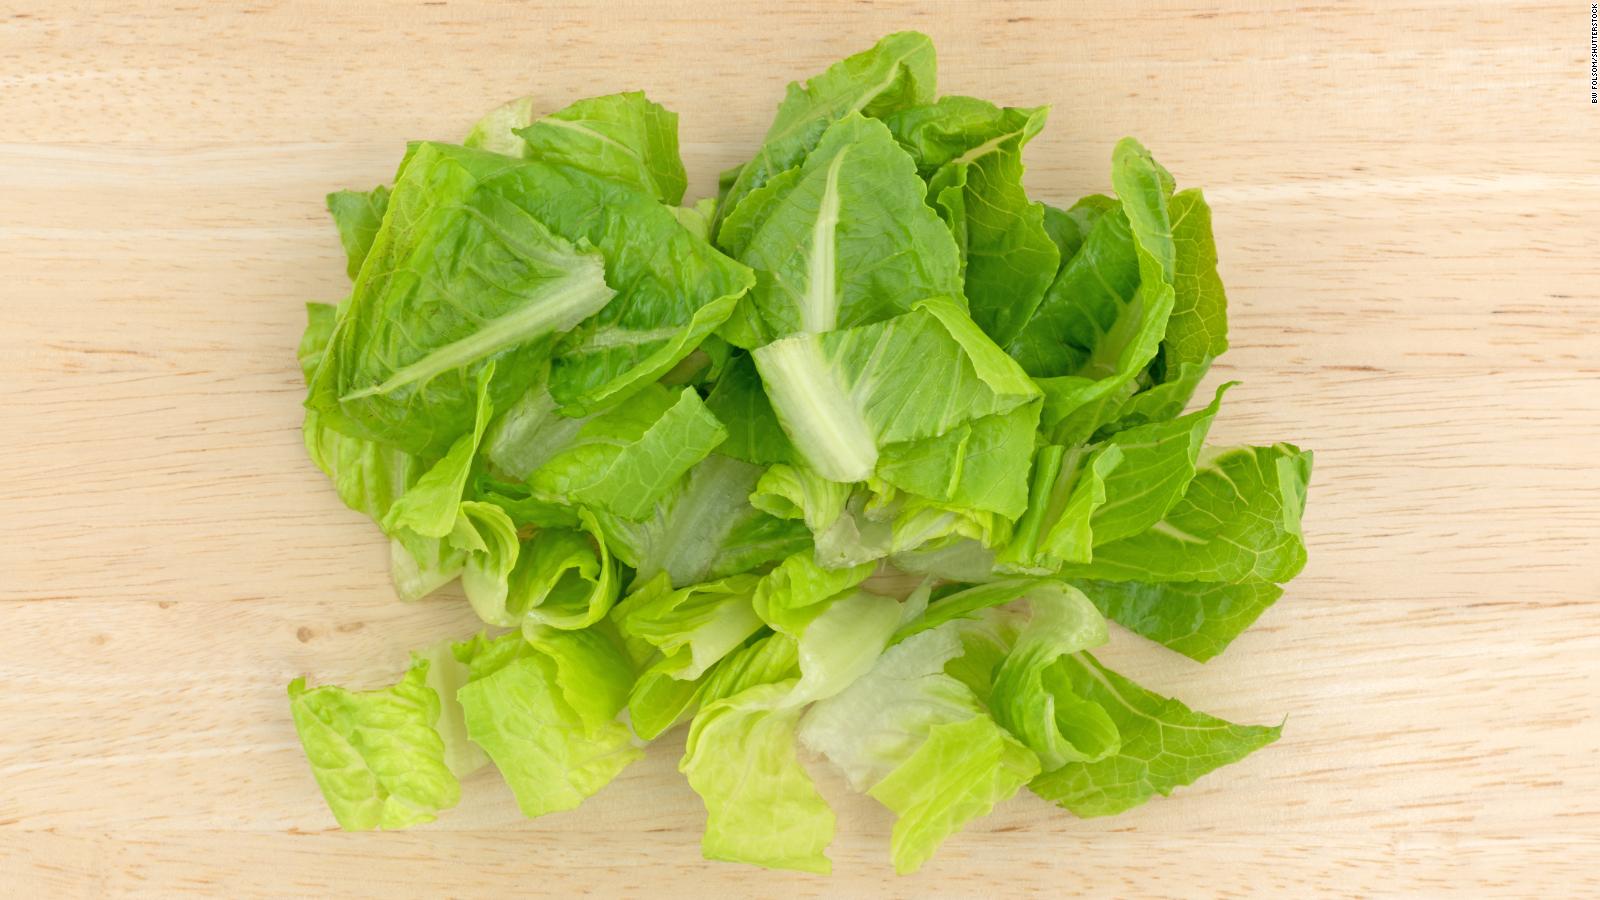 Romaine lettuce recall CDC confirms 138 cases of E. coli in 25 states